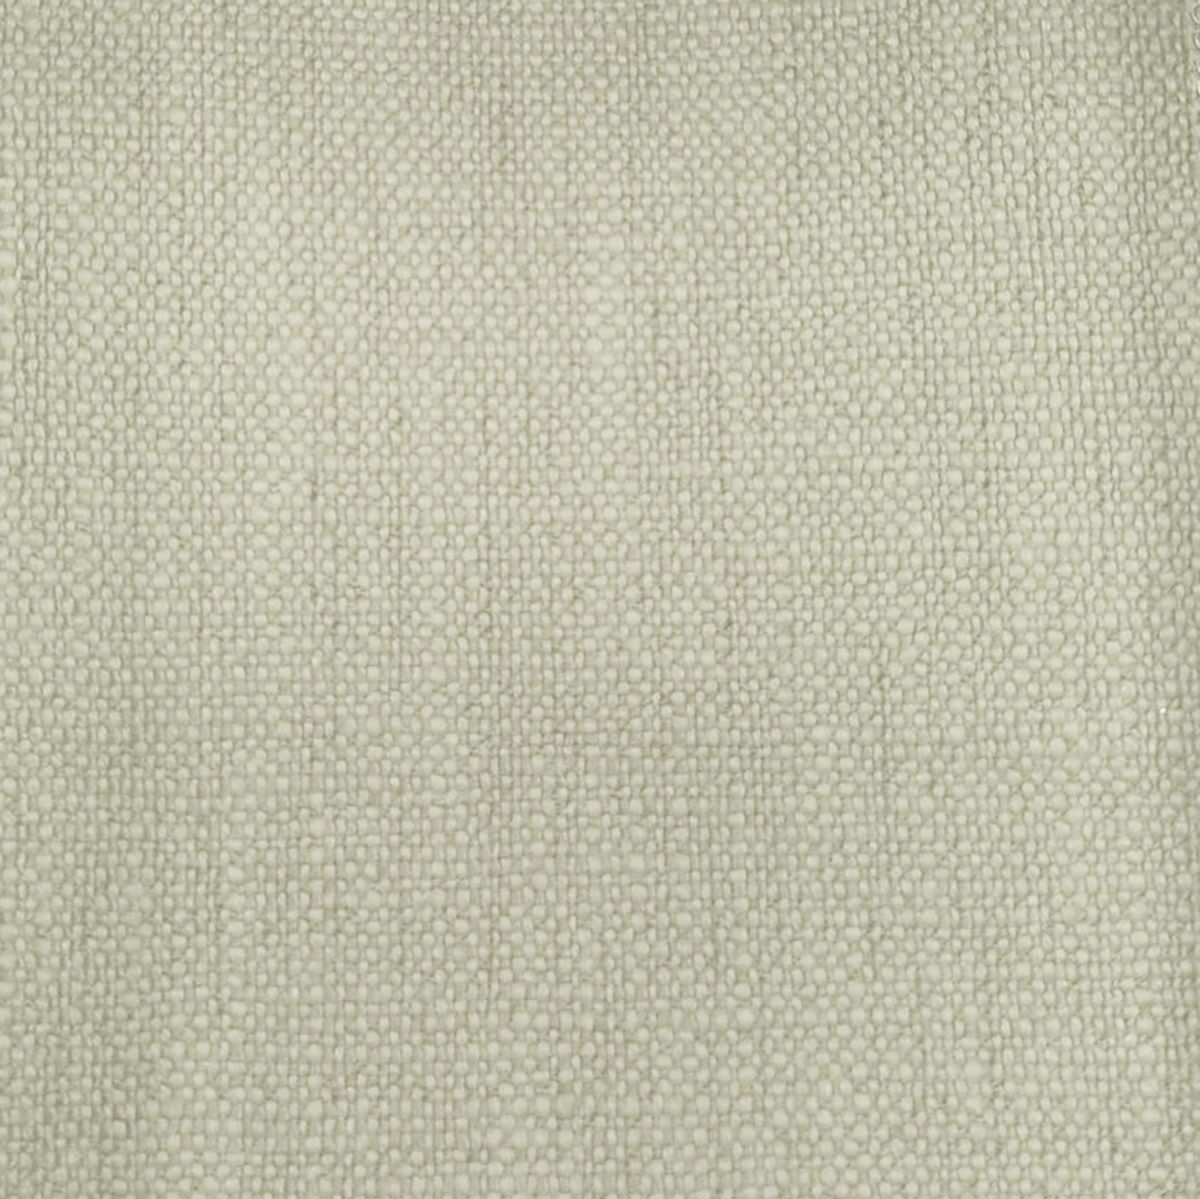 Trento Ivory Fabric by Voyage Maison